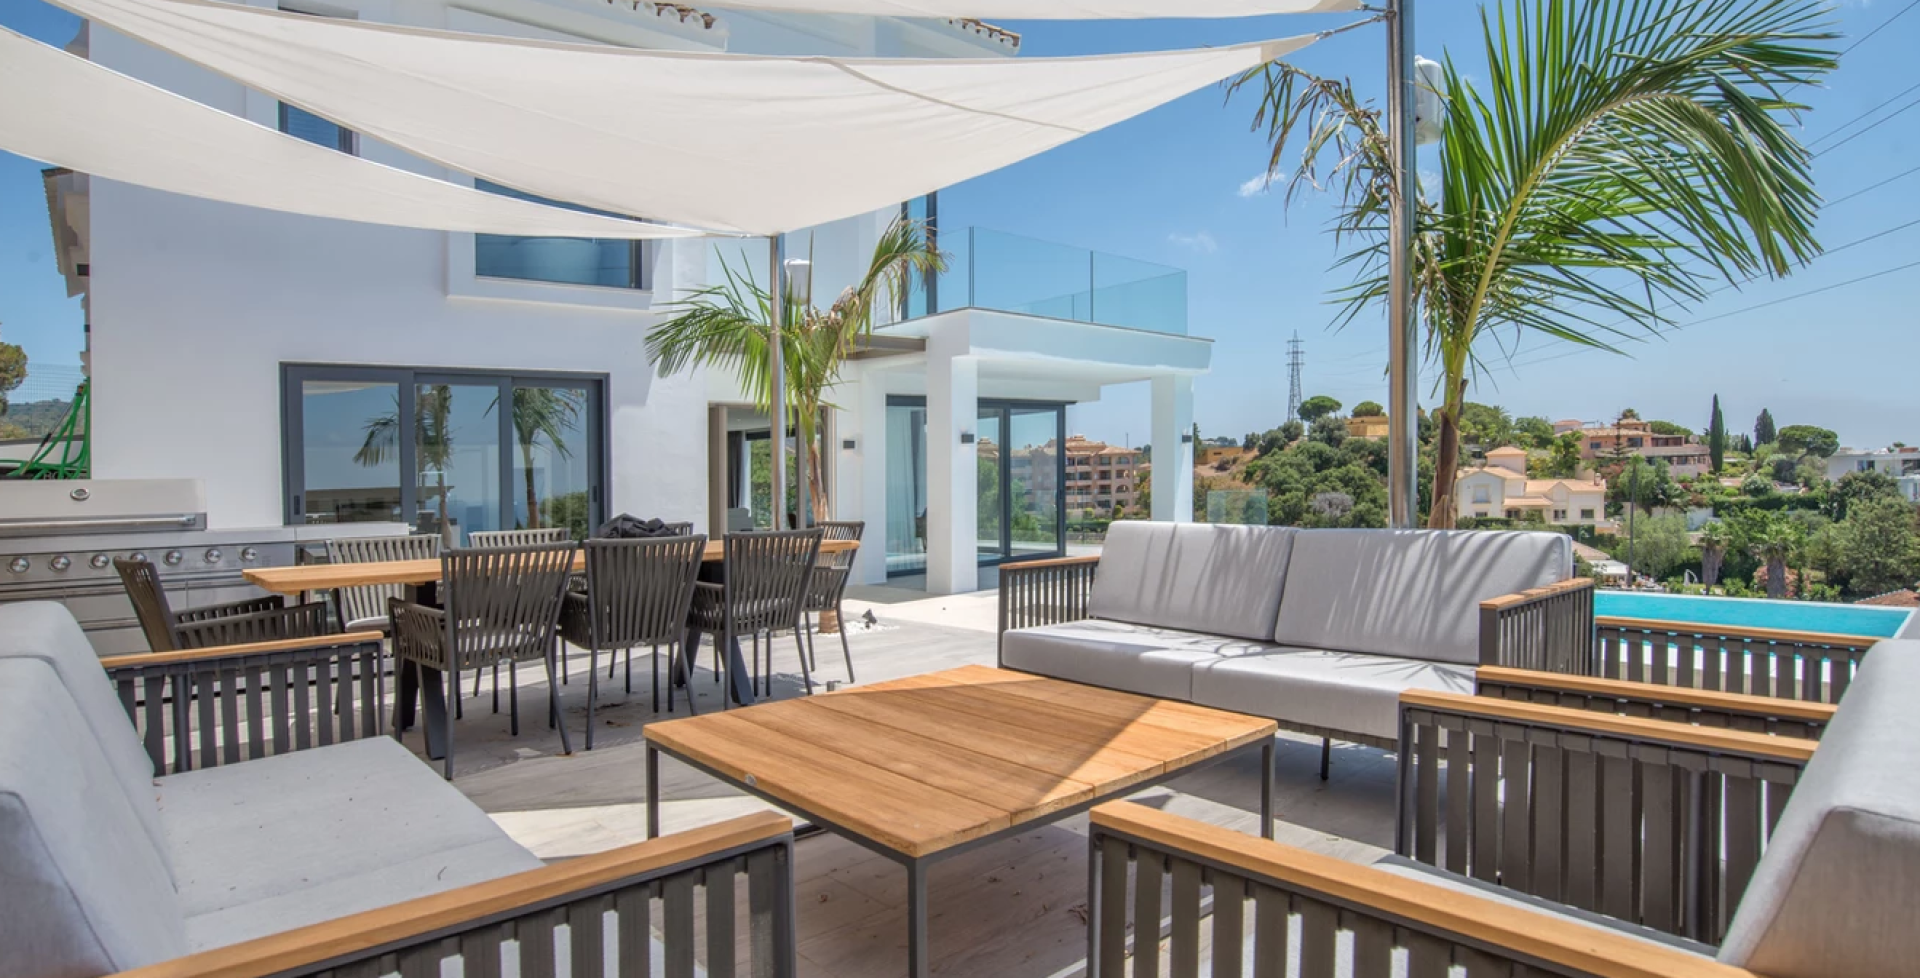 VILLA SUN 7 bedrooms Marbella holiday rental terrace seating sea views